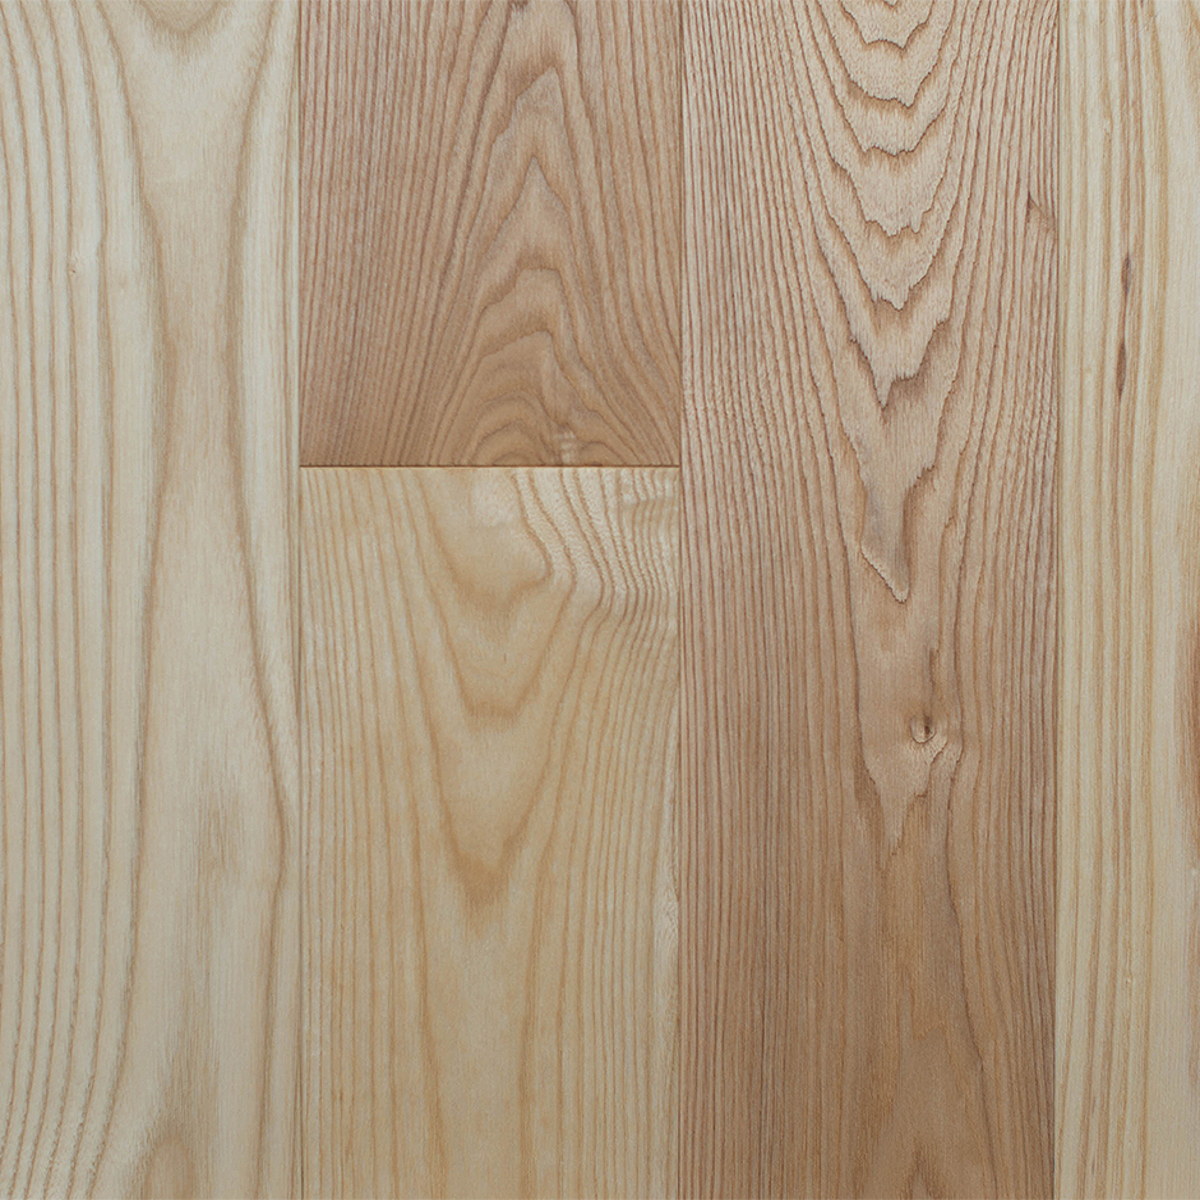 Ash Natural 4 1 Hardwood Flooring, Is Ash Wood Good For Flooring